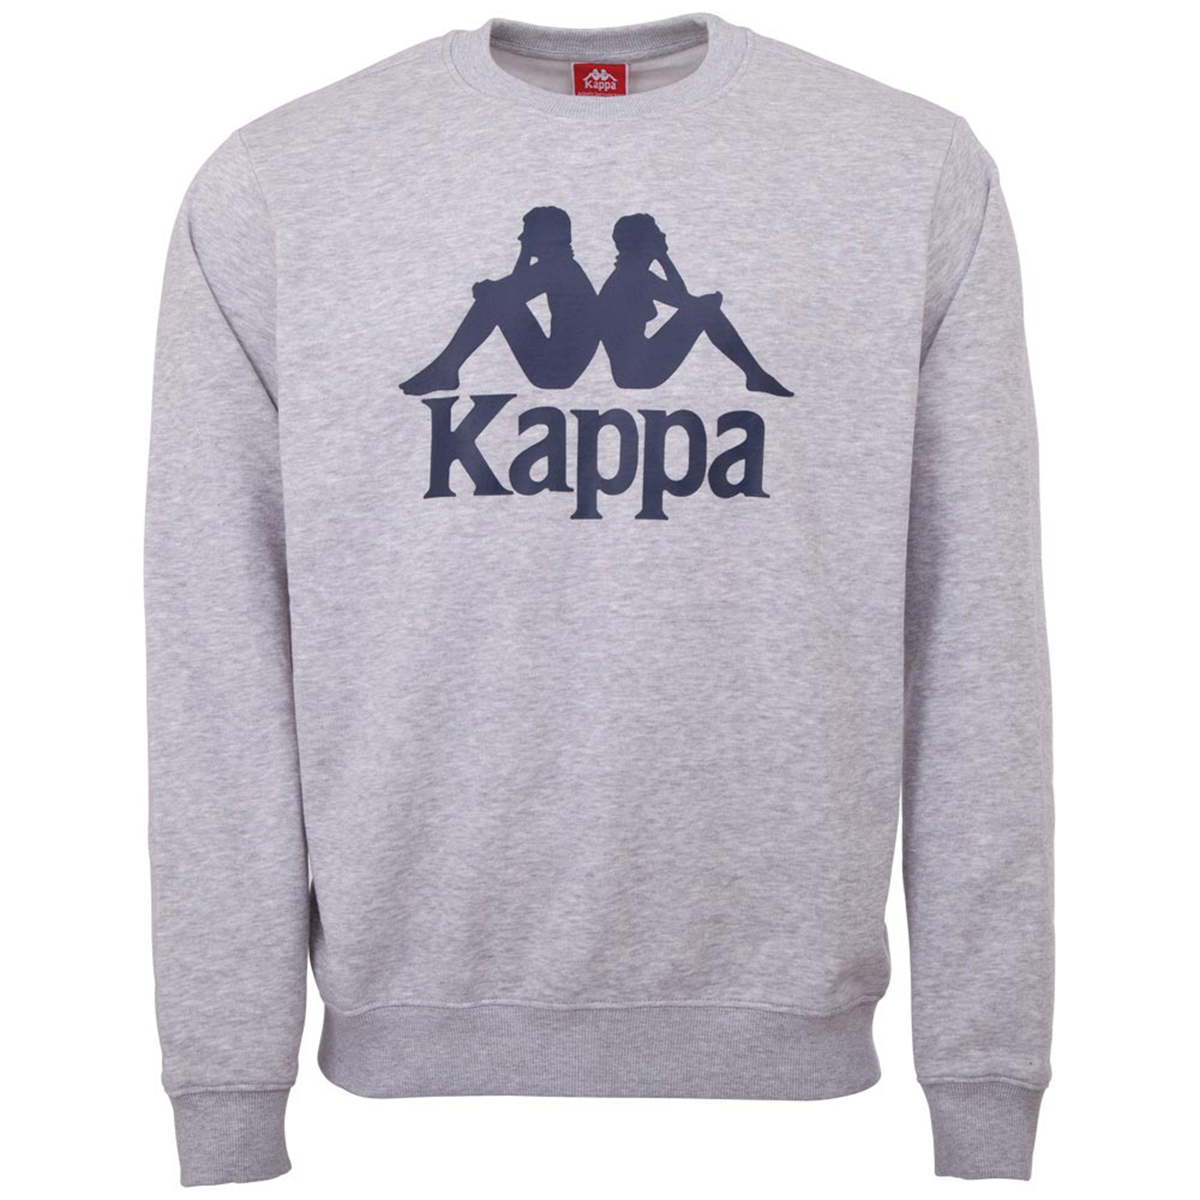 Kappa Herren Sweatshirt grau 703797 18M von Kappa